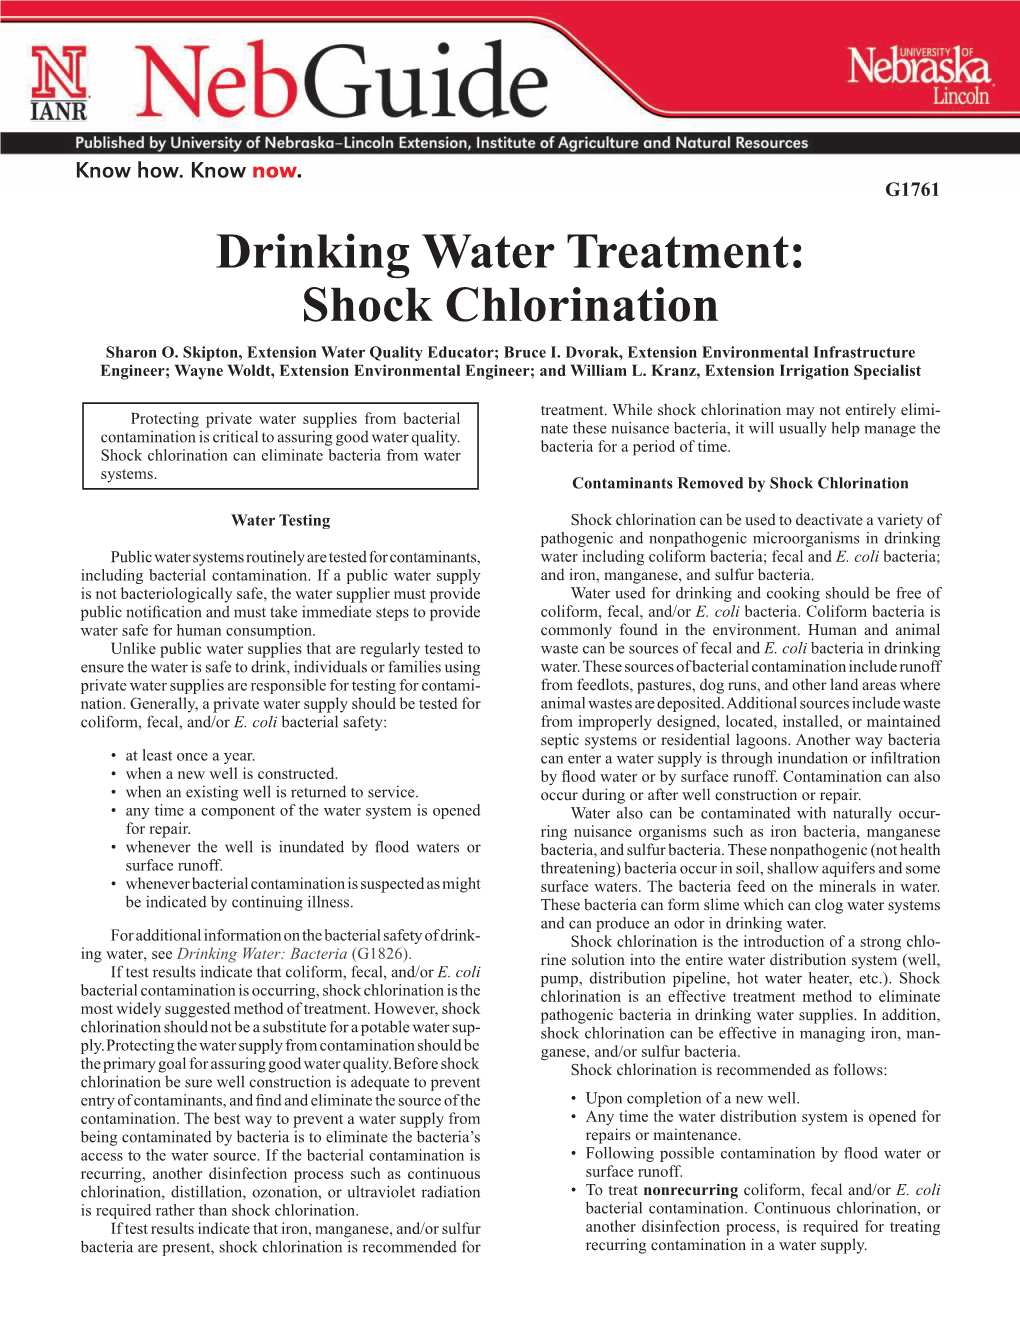 Drinking Water Treatment: Shock Chlorination Sharon O